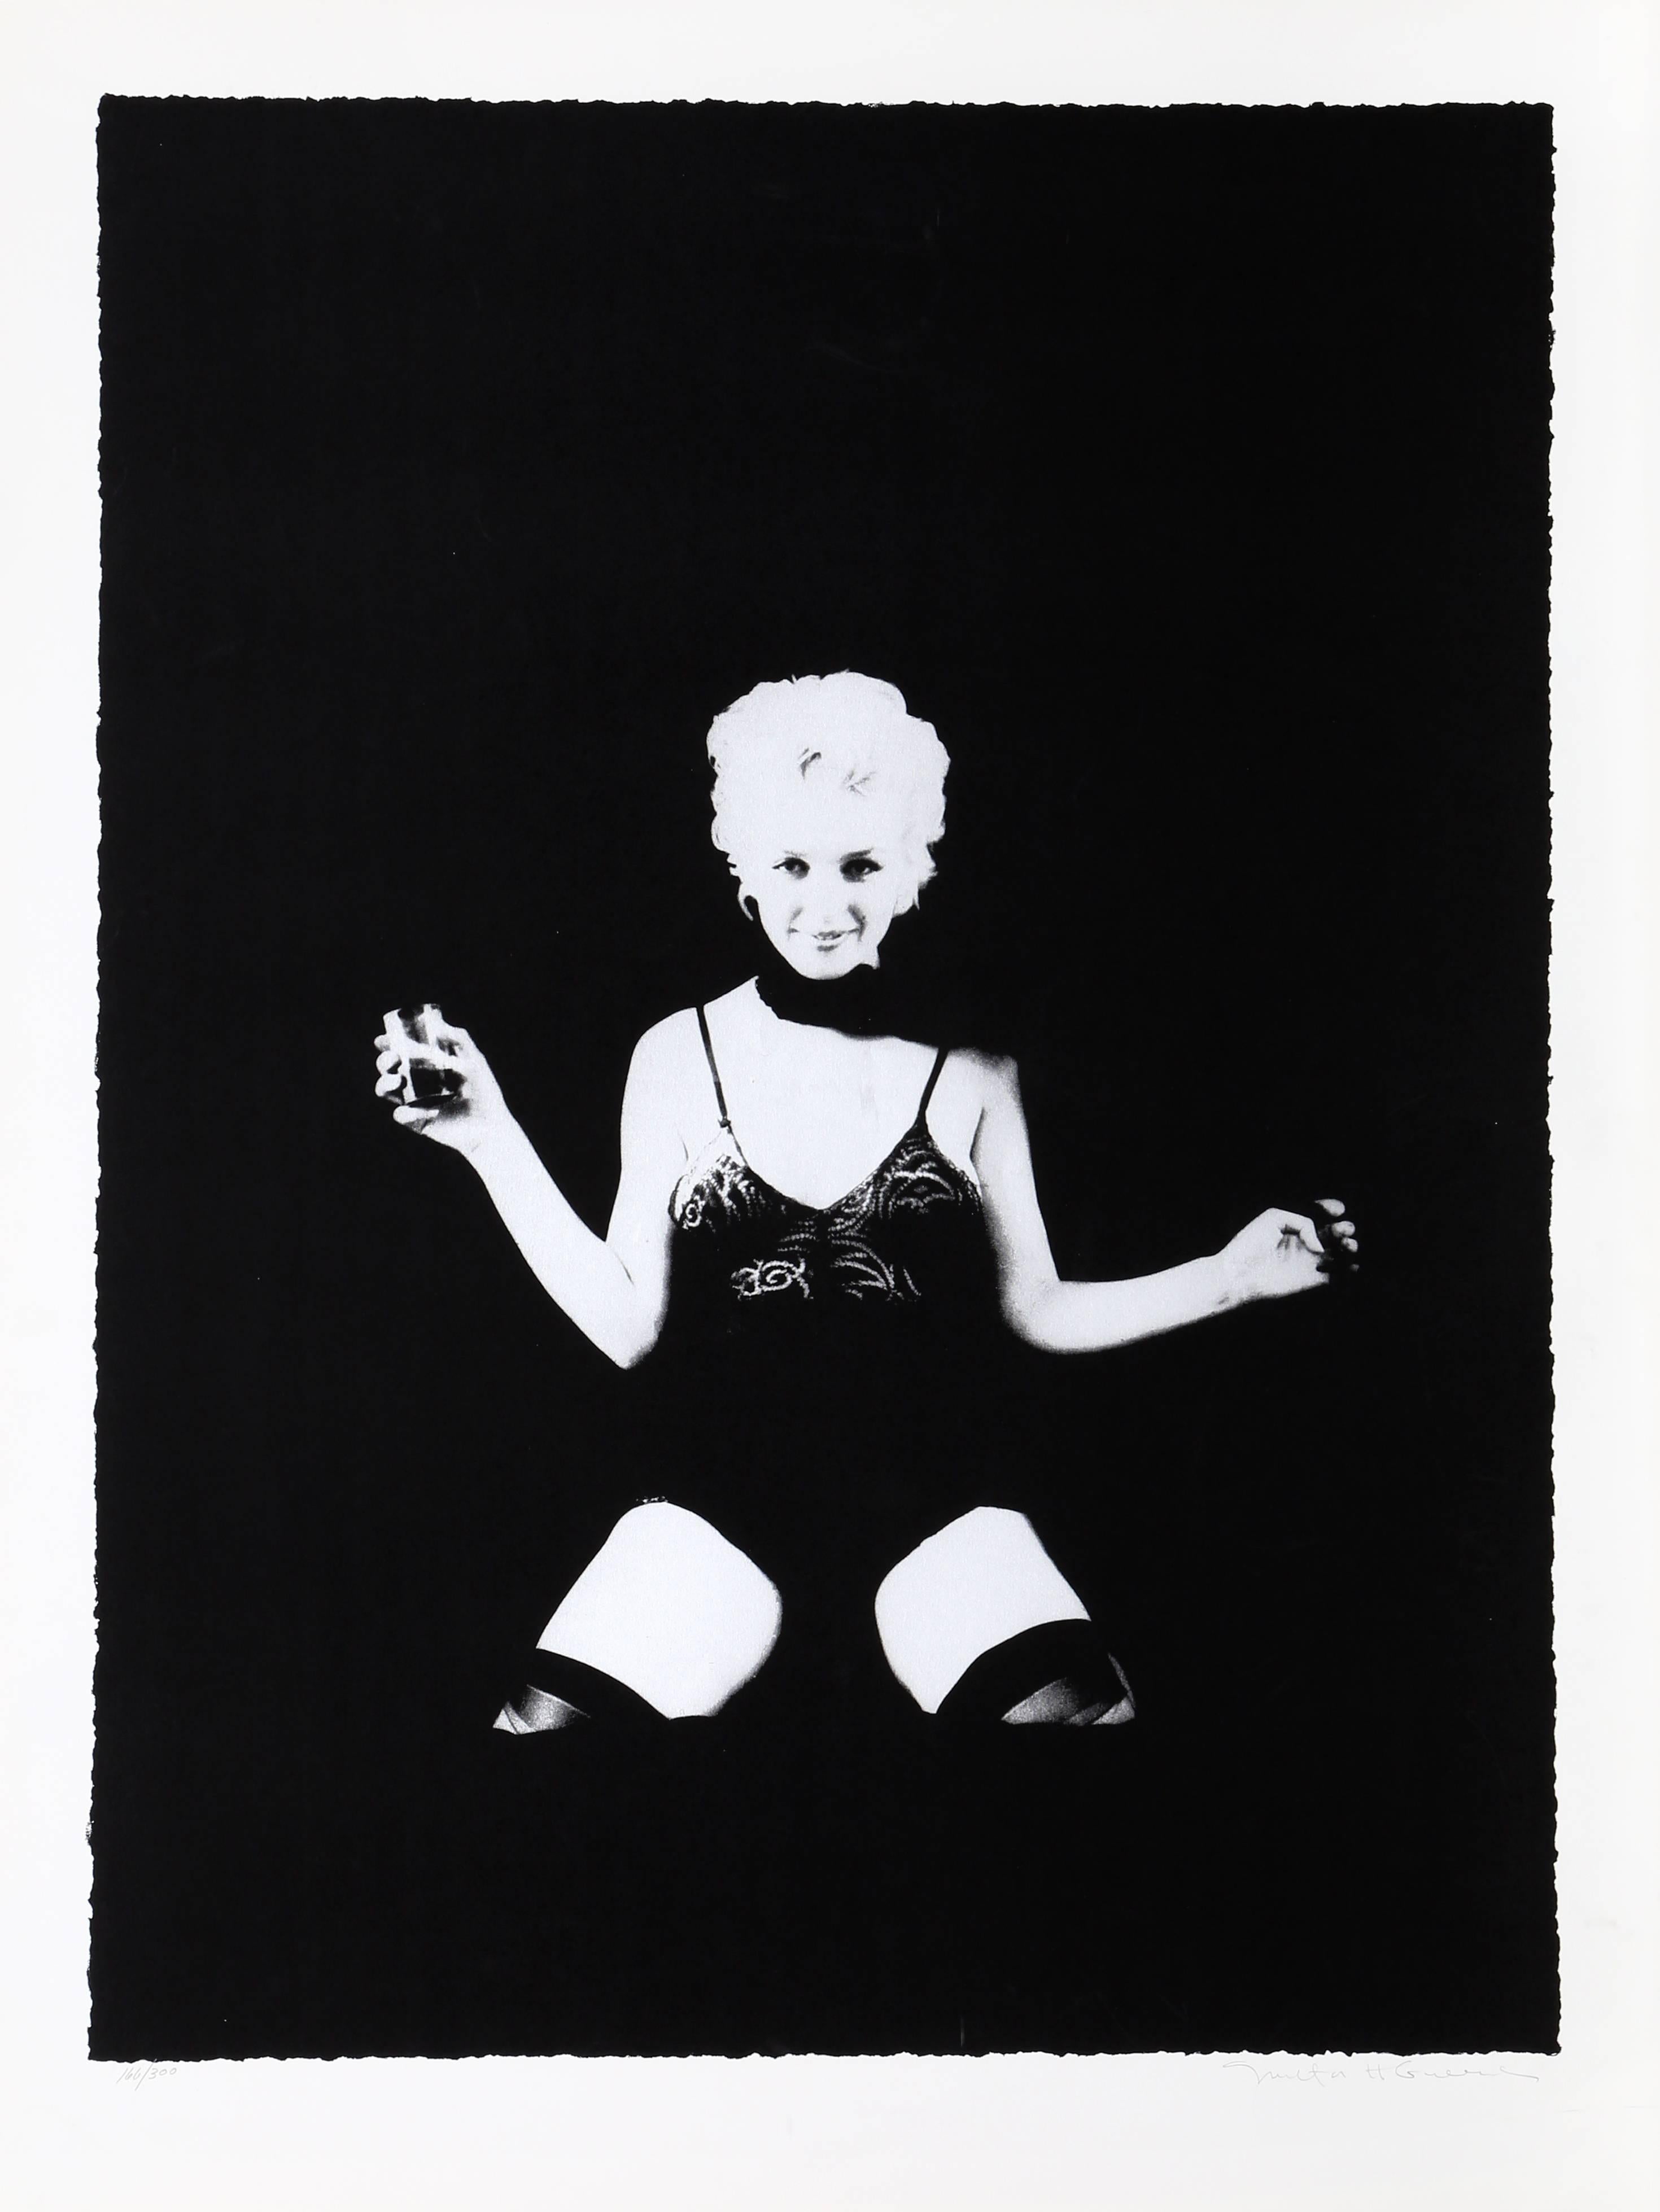 Milton H. Greene Portrait Photograph - Marilyn Monroe "A Little Drink" from the Black Sitting